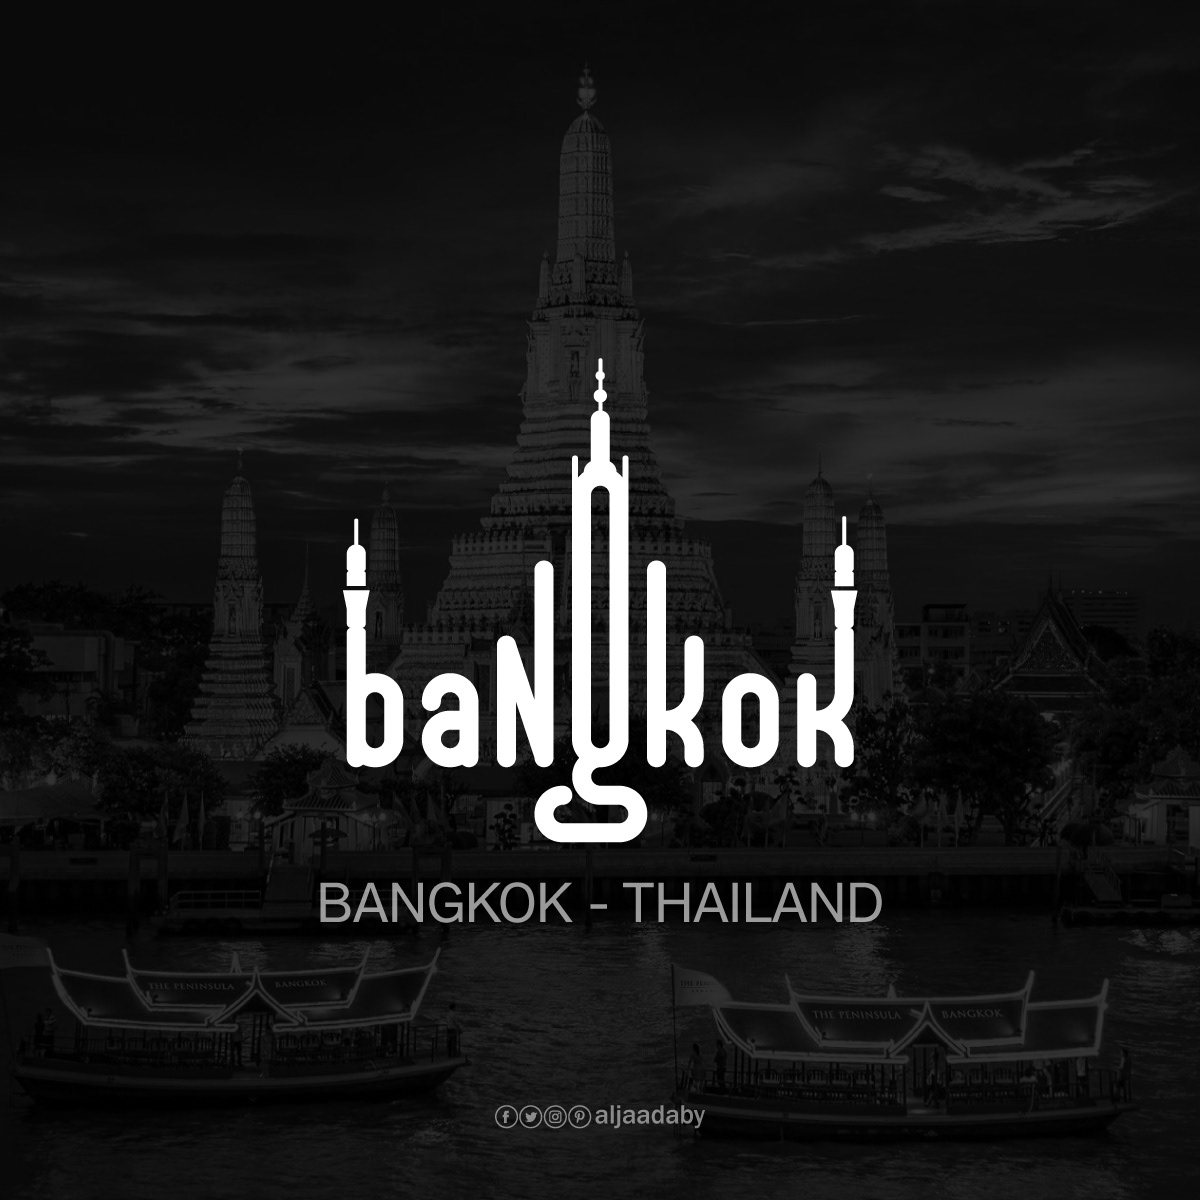 Typographic city logos based on their famous landmarks - Bangkok